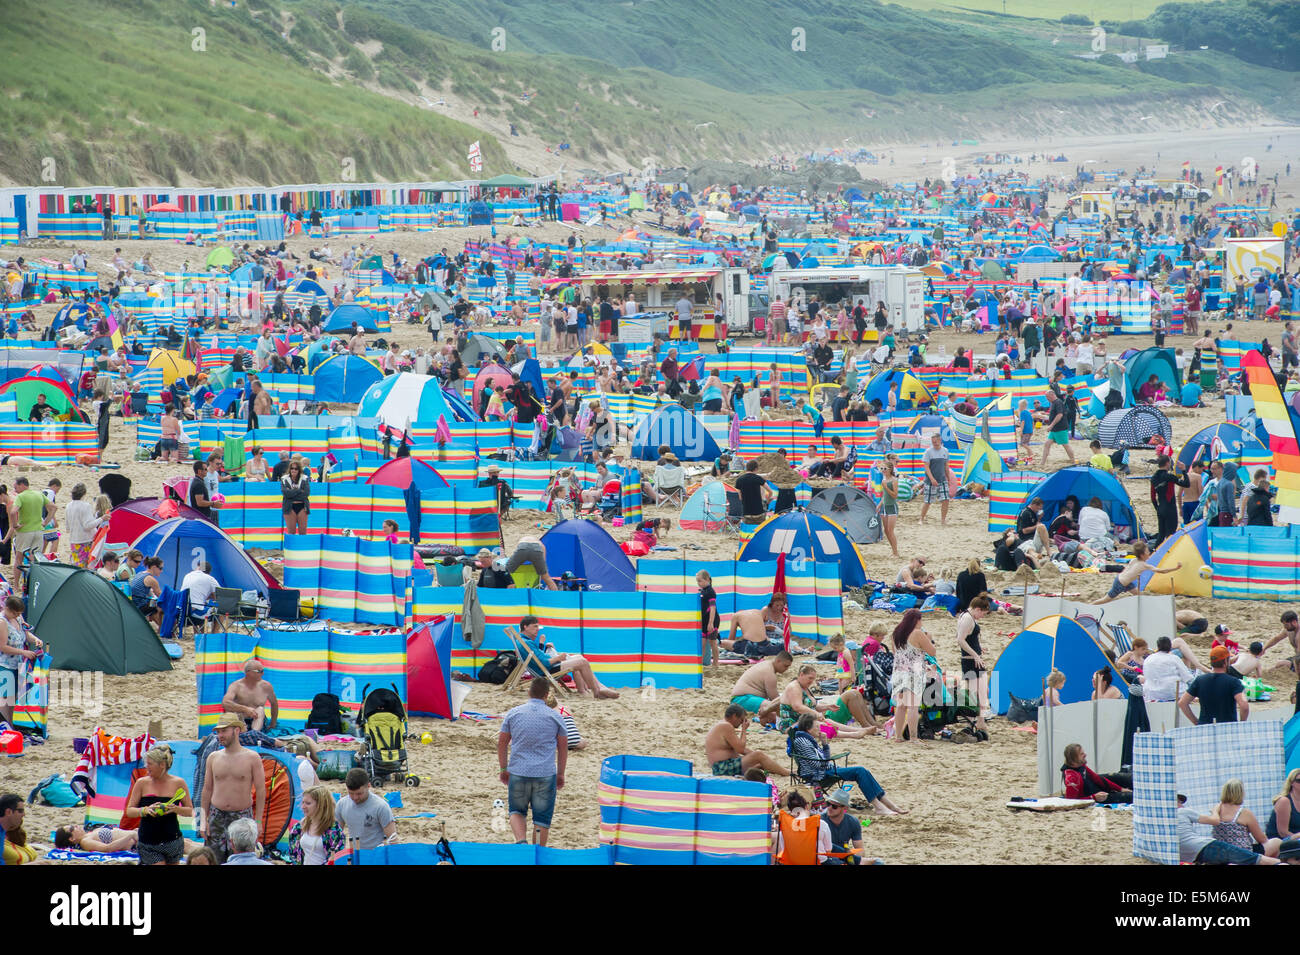 Windbreaks line the beach as thousands of sunbathers enjoy the ...